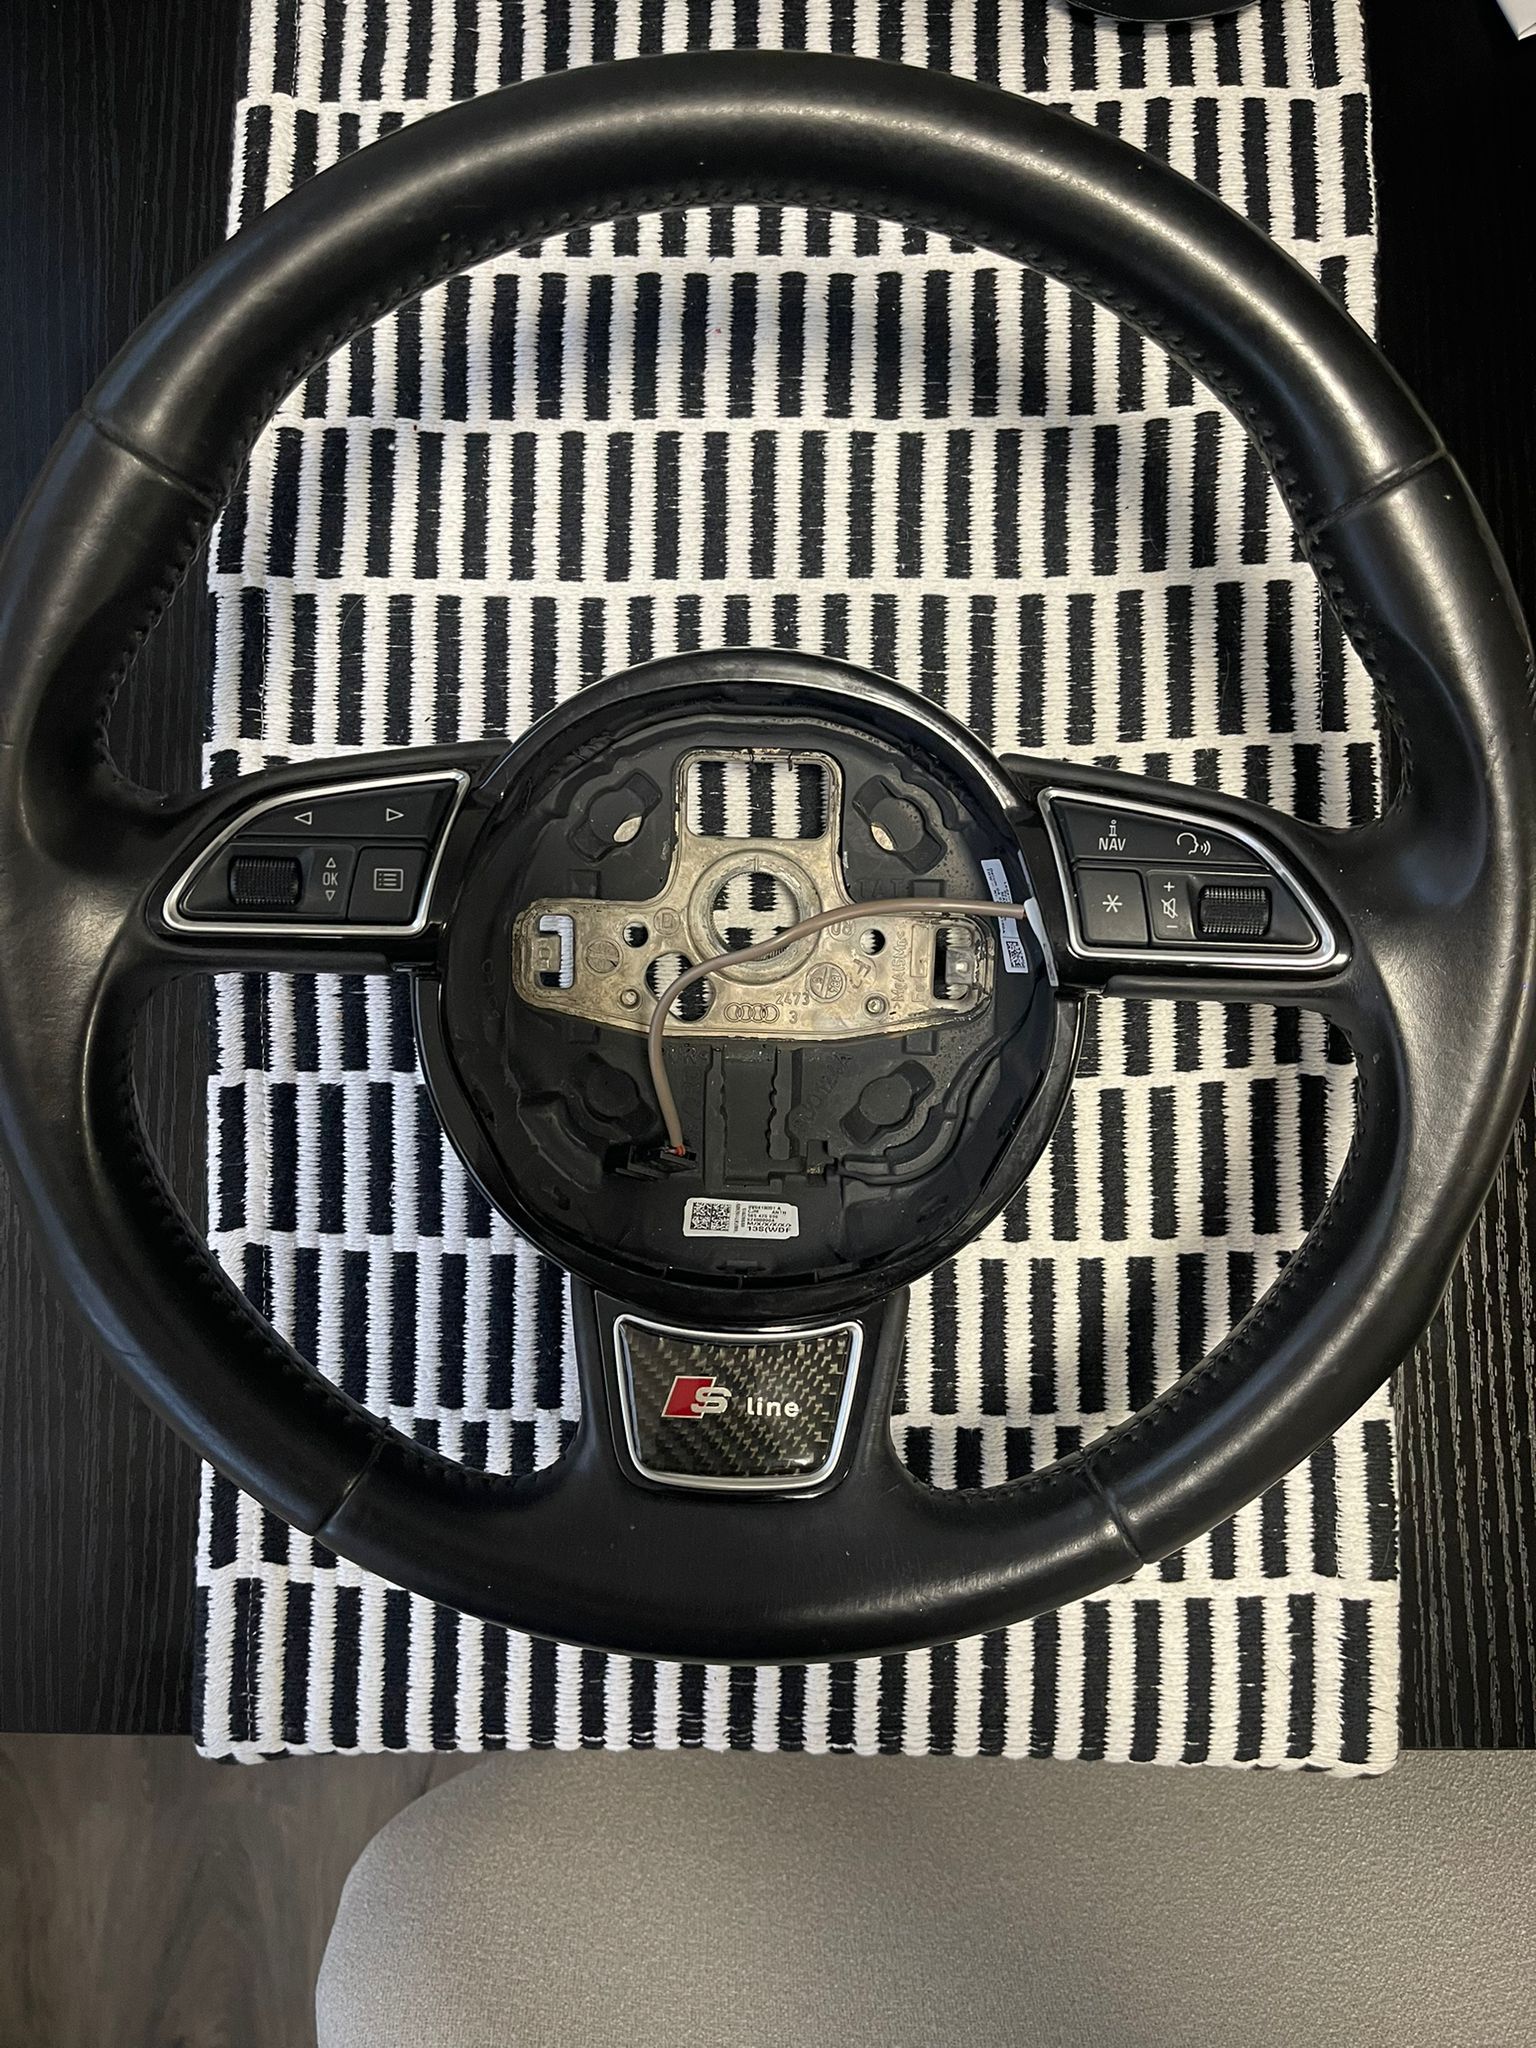 Audi A3 Steering Wheel S Line